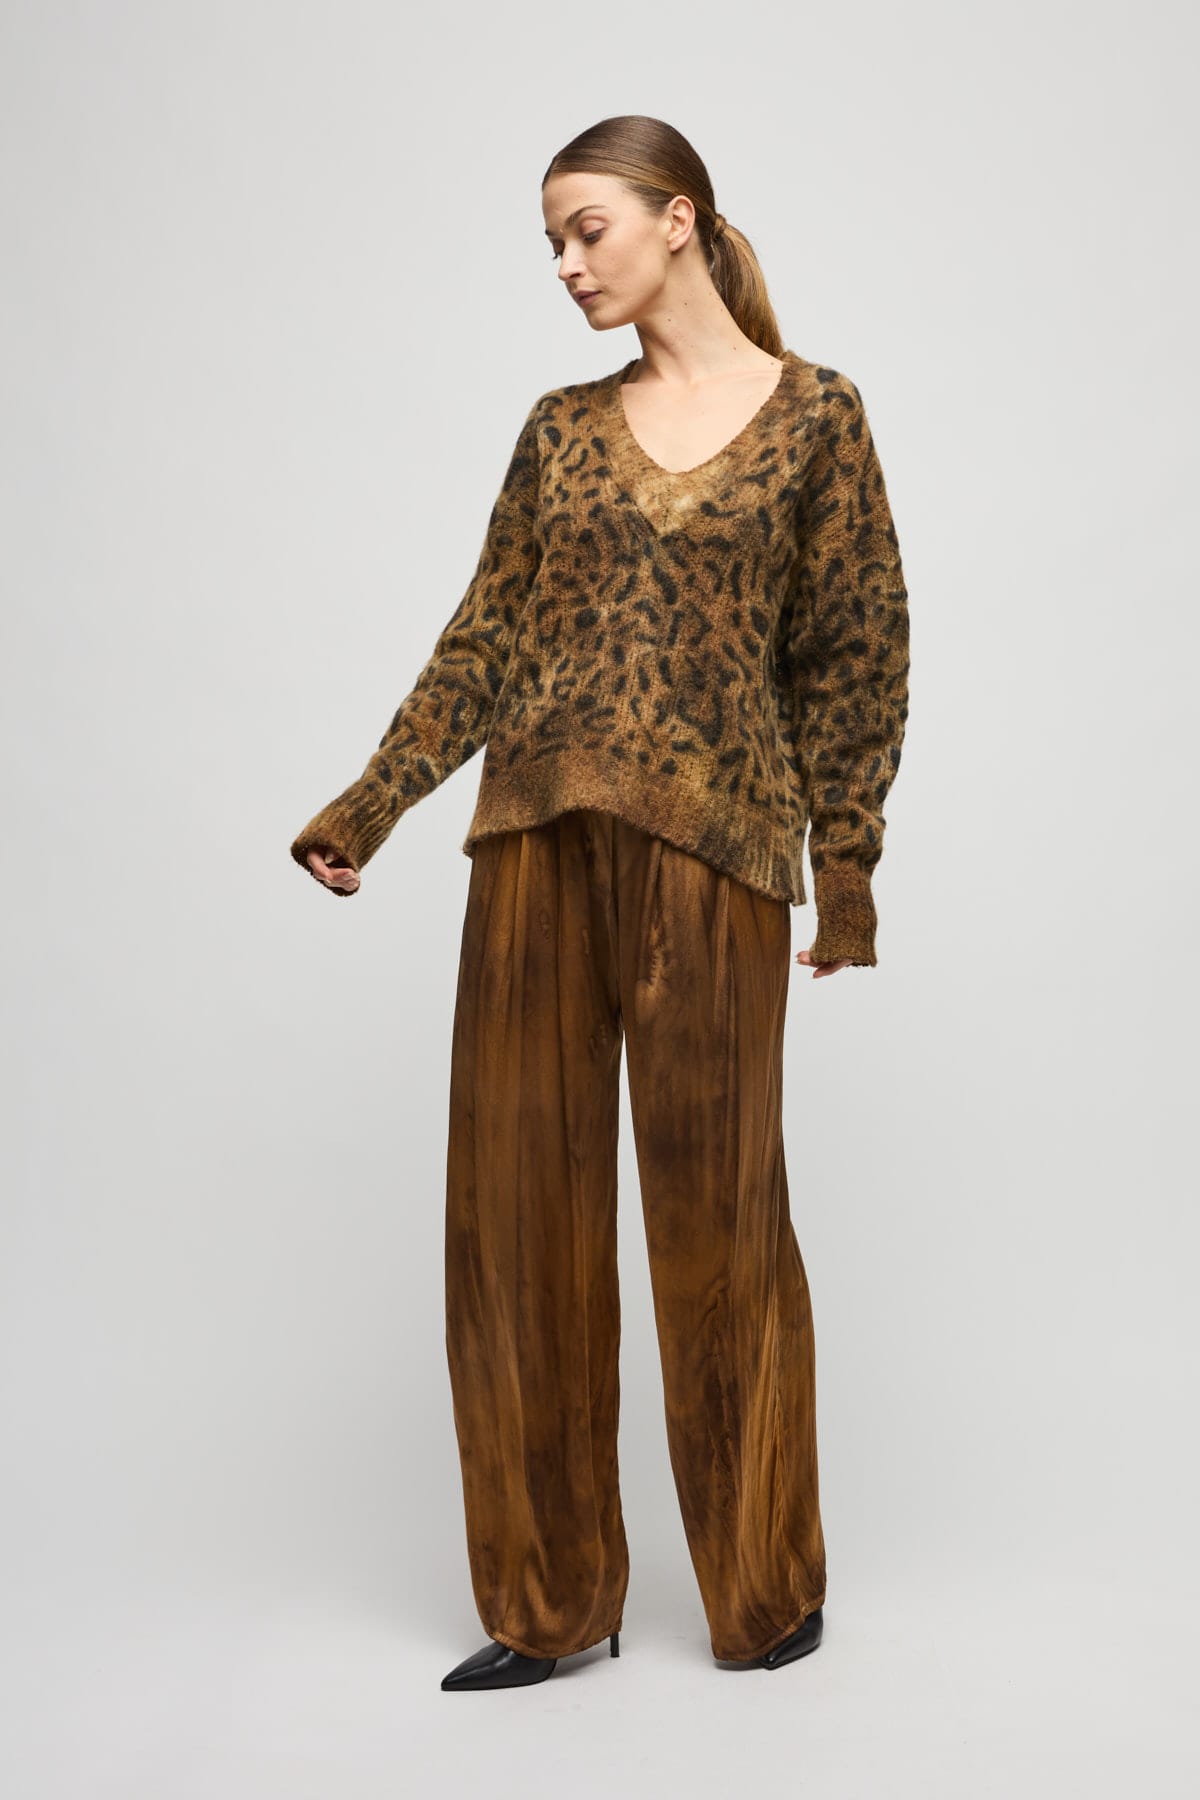 Sweater - thegreatputonmvSweaterSweaterSweaterSweaterAvant Toithegreatputonmv108817V neck leopard pullover with new camouflage effectS22506169